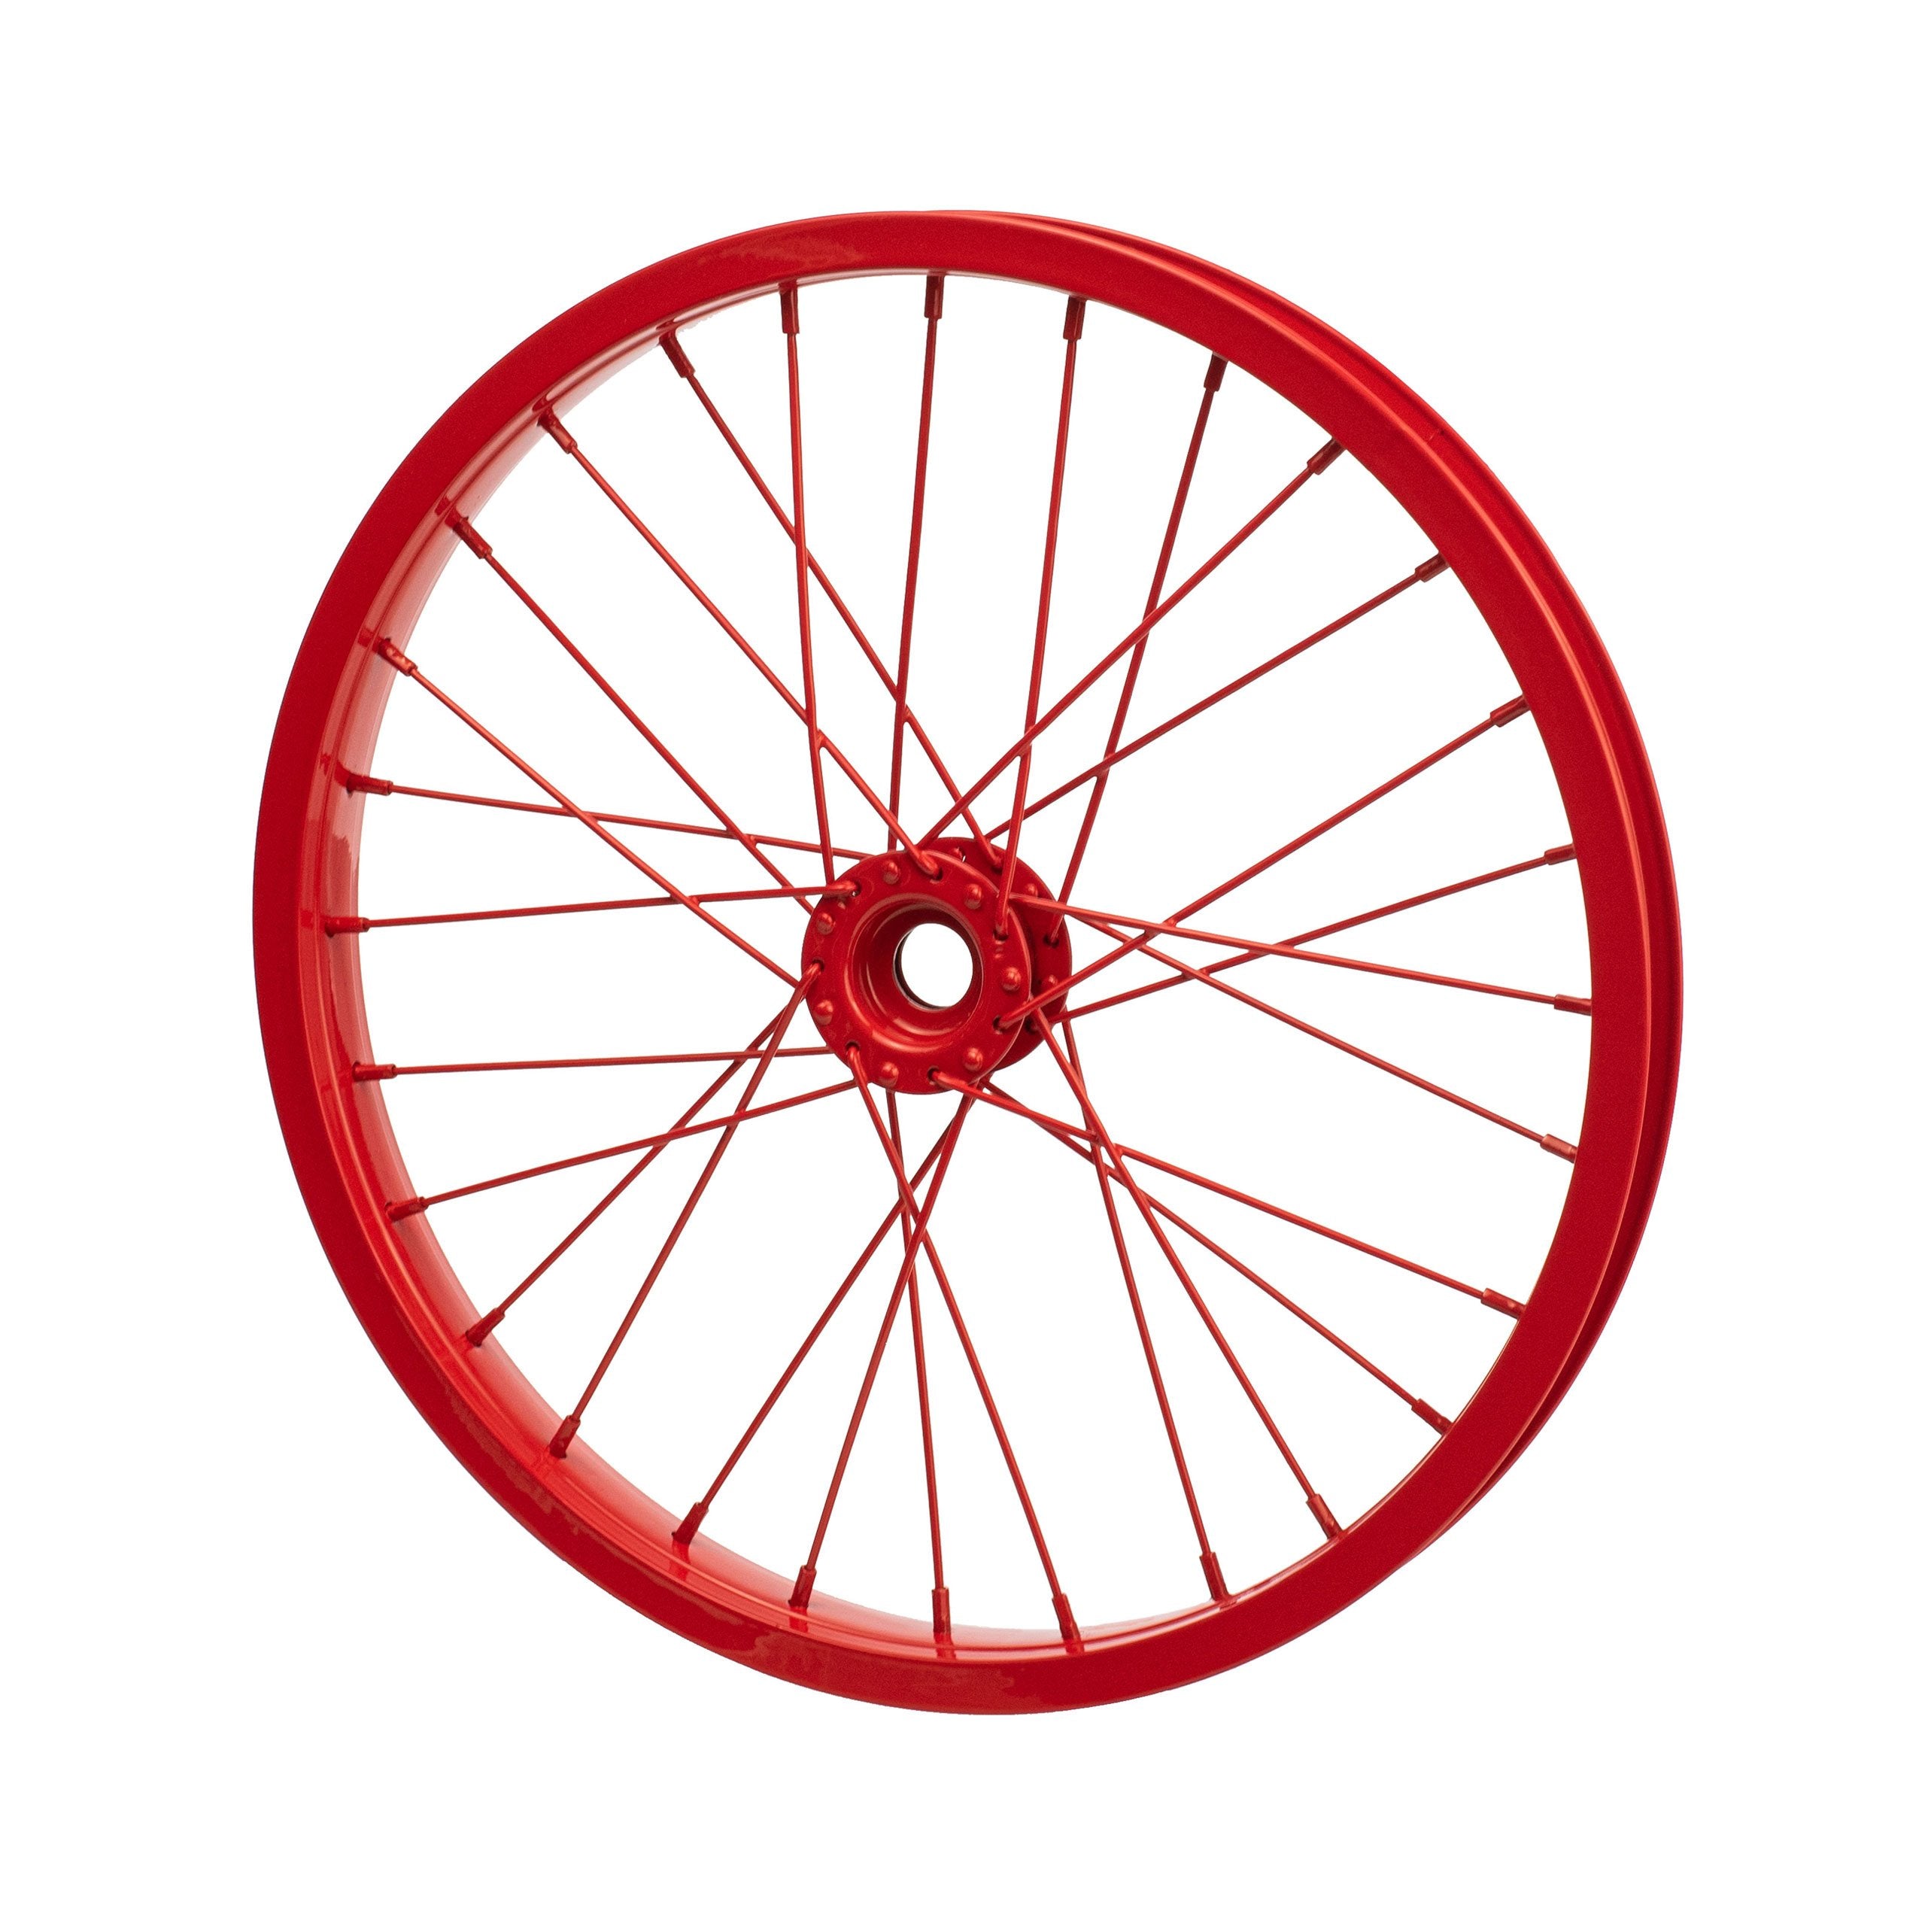 16" Decorative Bicycle Rim: Red